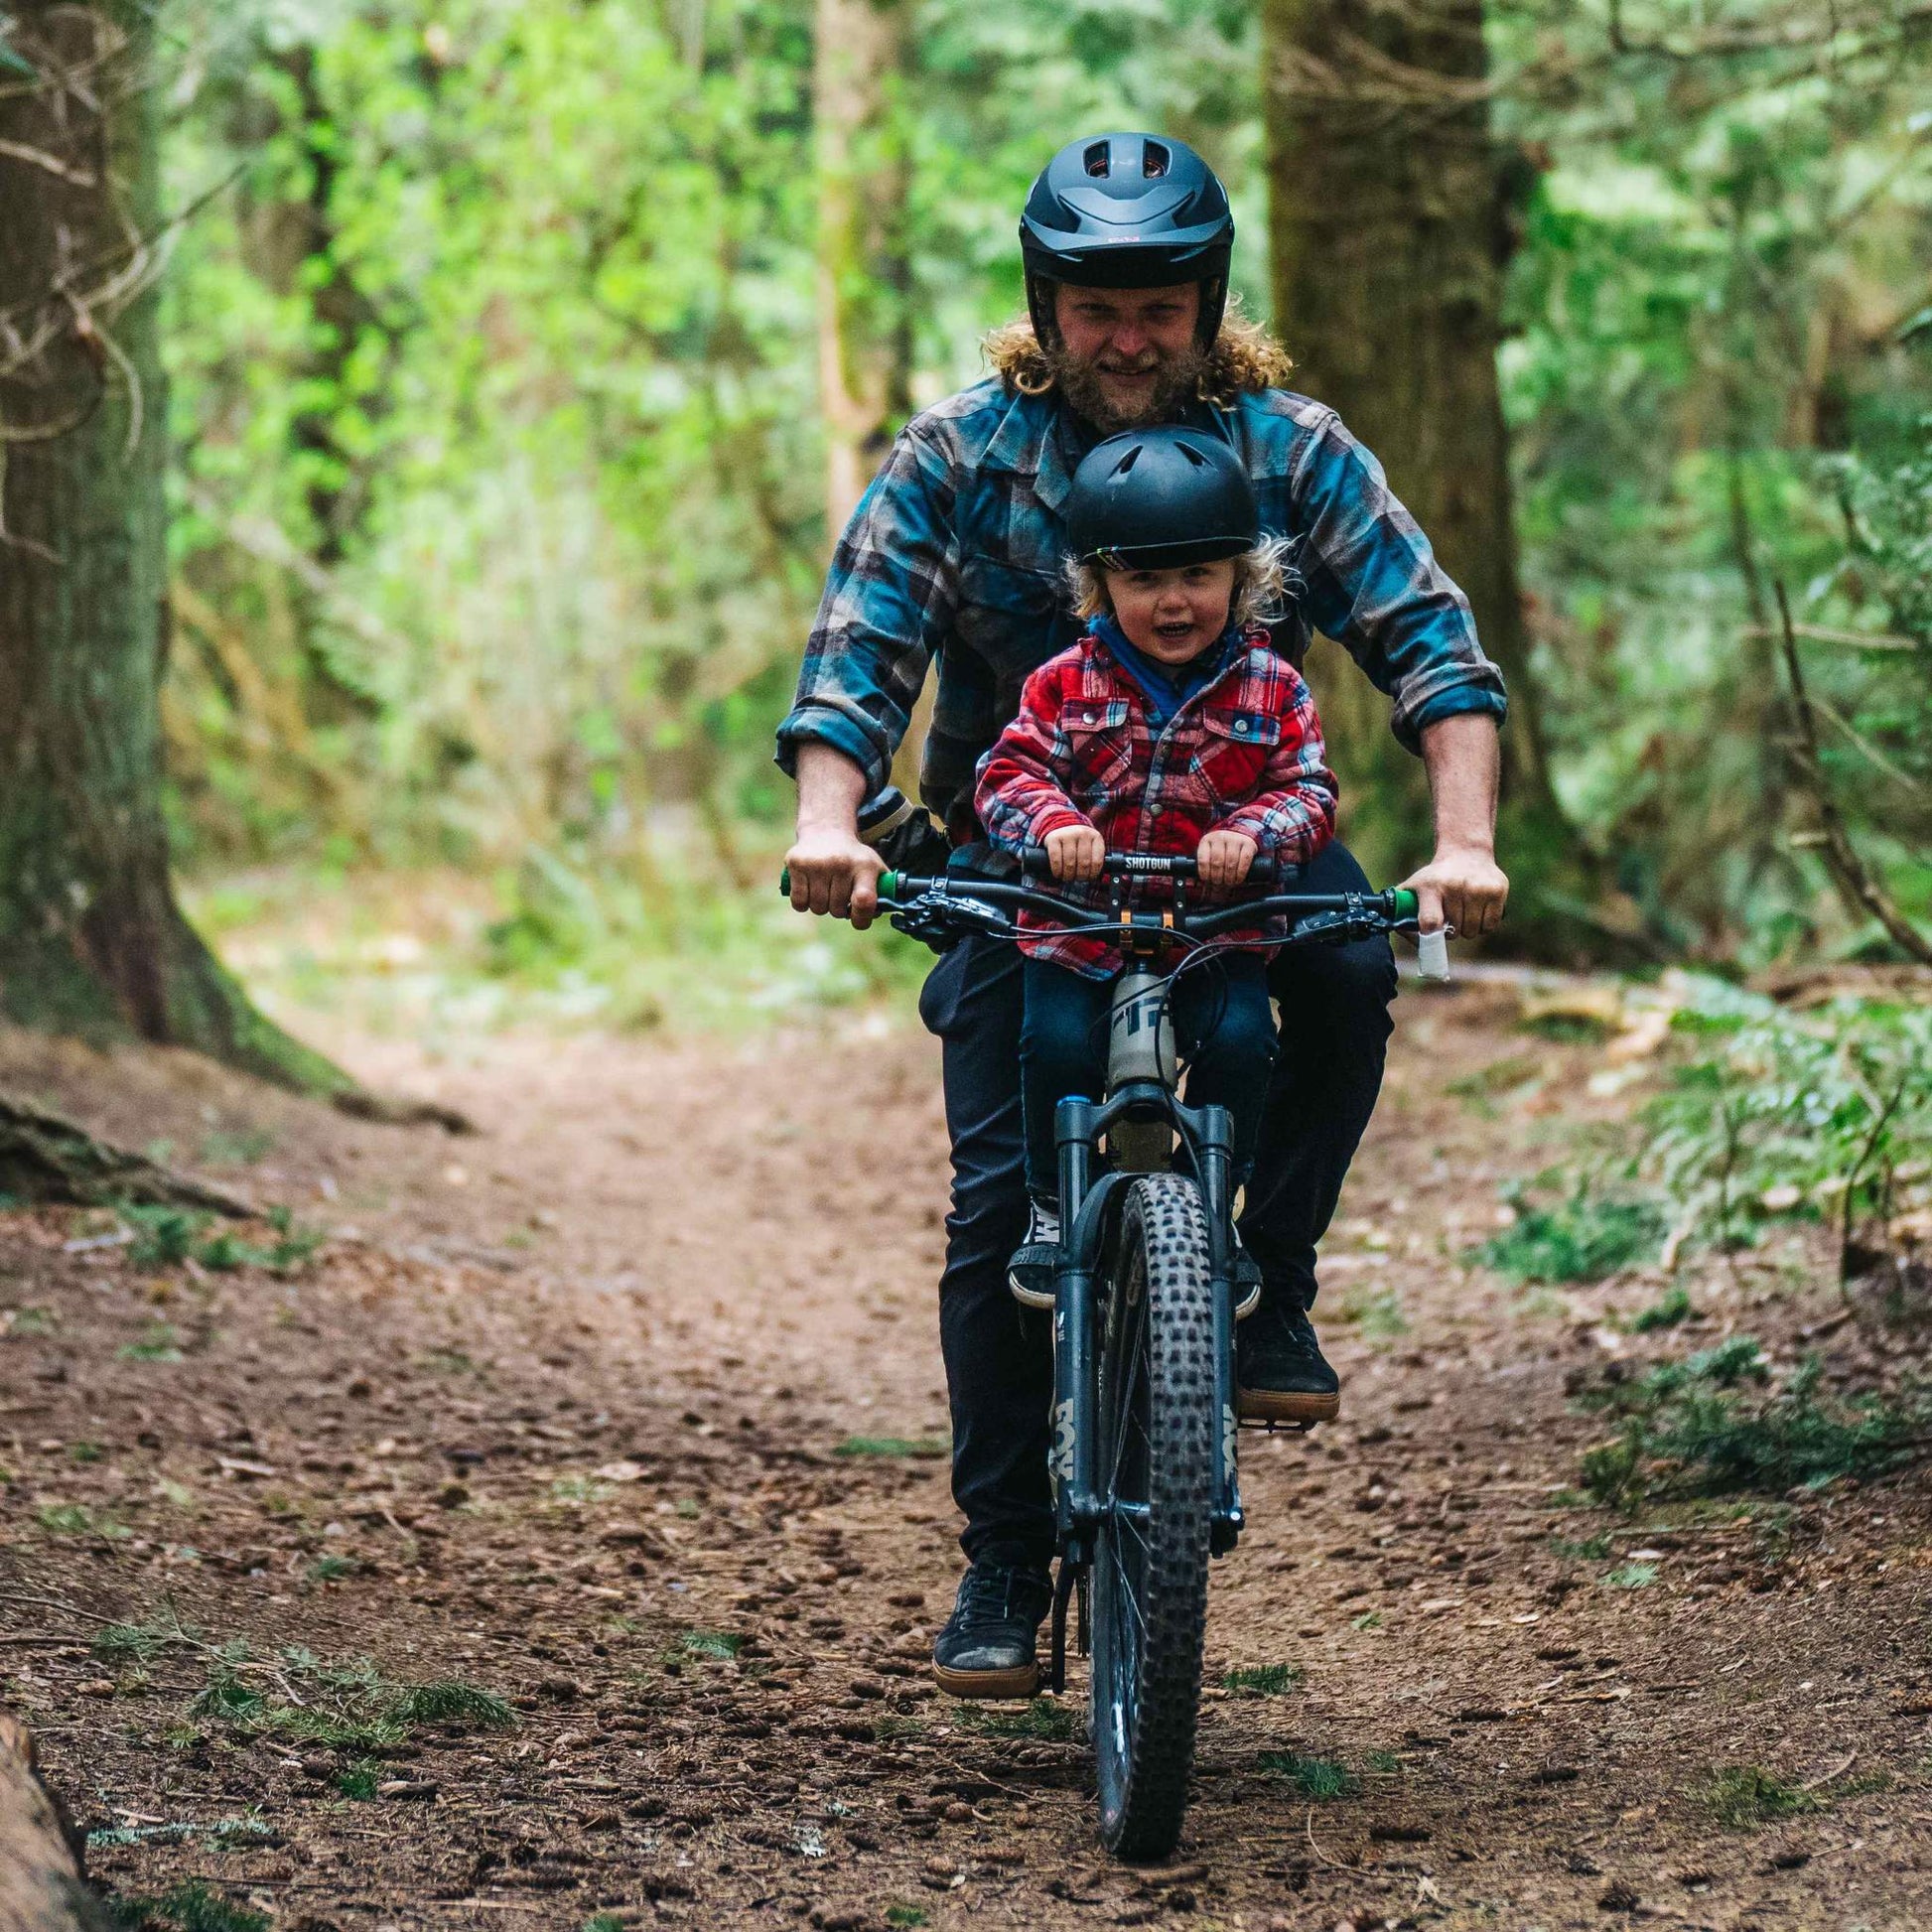 Shotgun Child Bike Handlebars Riding On Trail With Parent Close Up